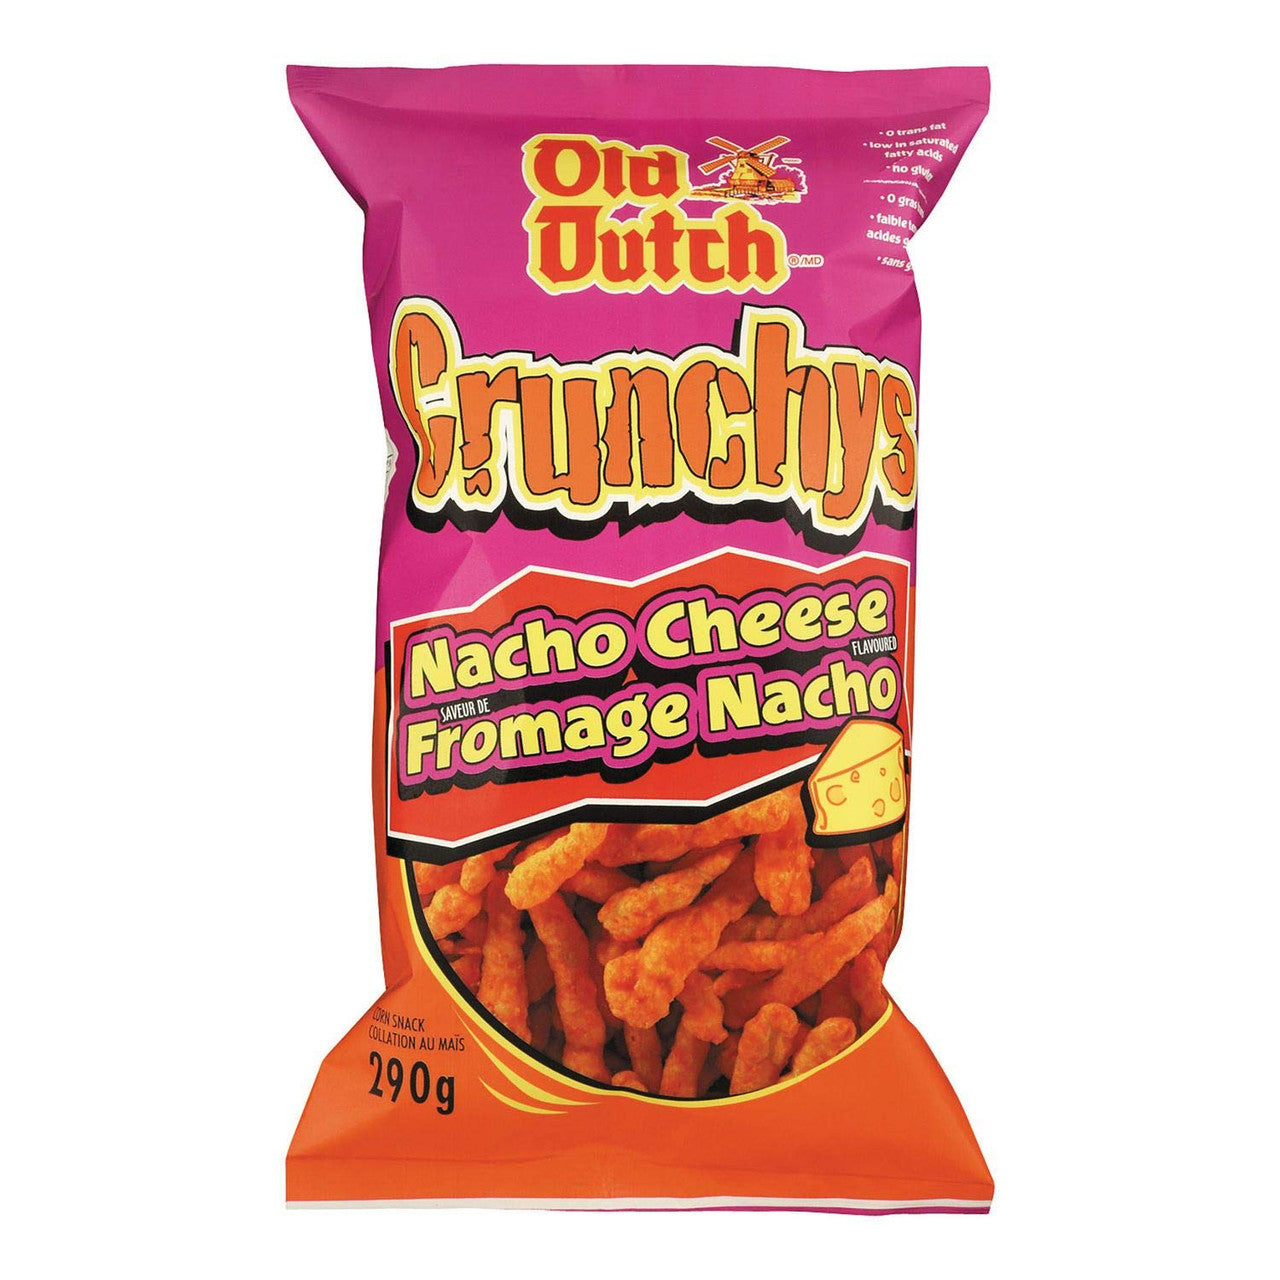 Old Dutch Crunchys Nacho Cheese Corn Snacks, 290g/10.2 oz., {Imported from Canada}